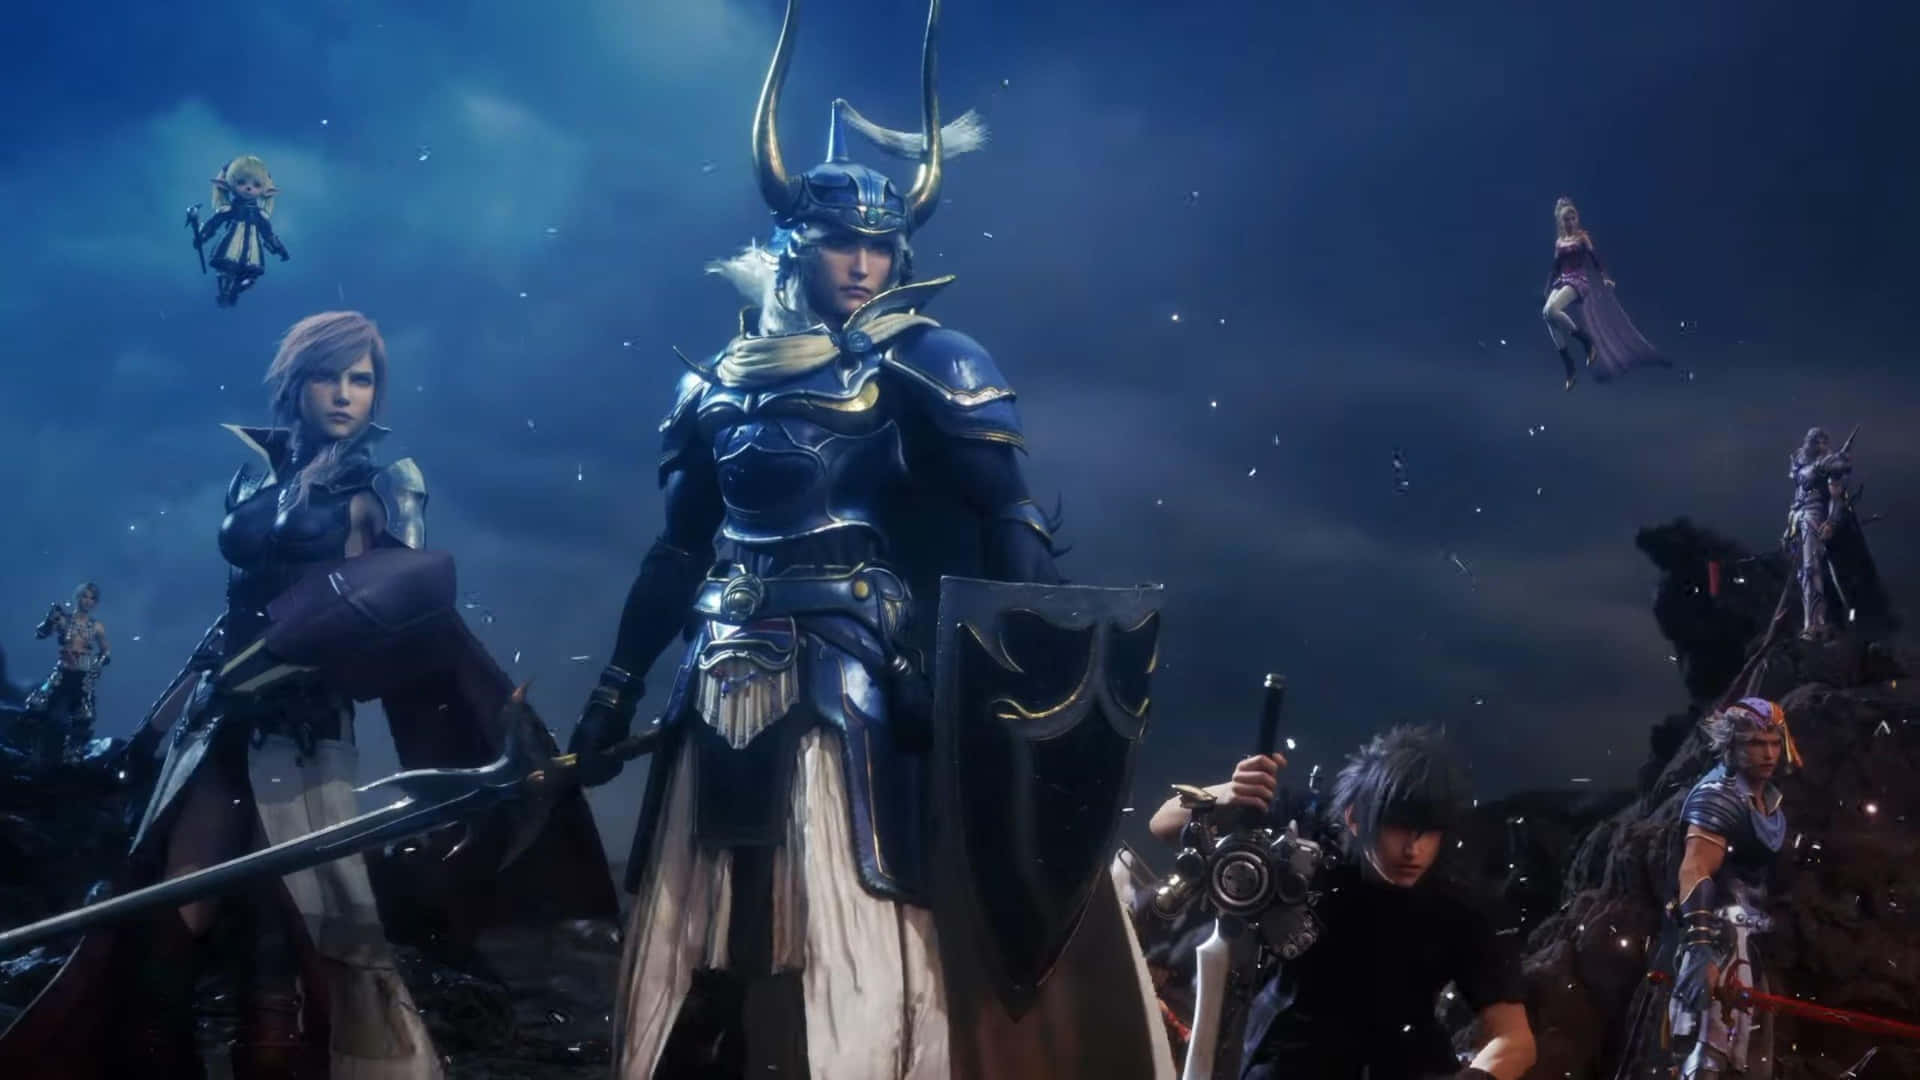 Final Fantasy Dissidia Characters In Intense Battle Wallpaper